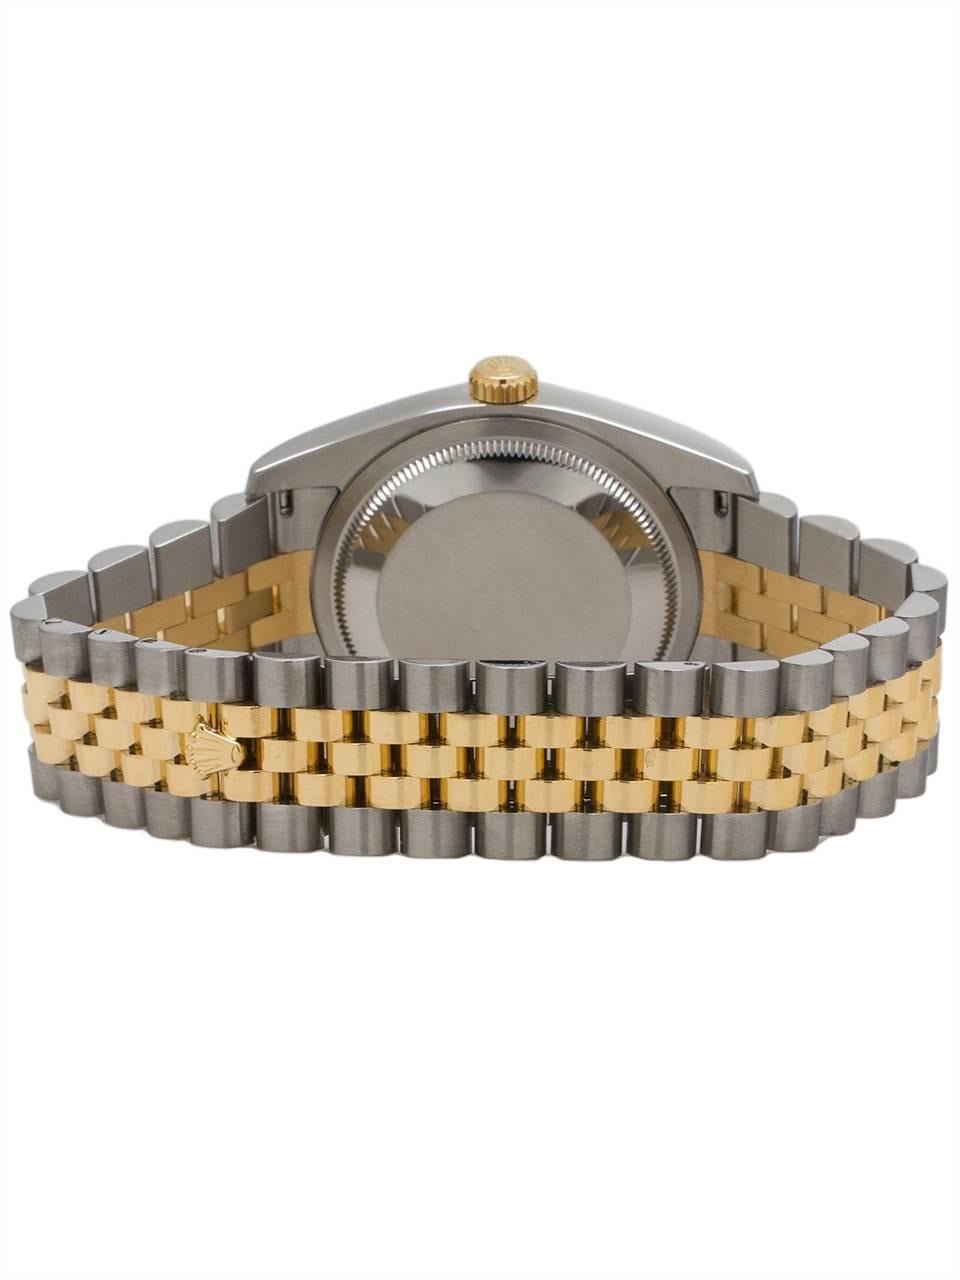 Women's or Men's Rolex Yellow Gold Stainless Steel Datejust Wristwatch Ref 116233, circa 2010